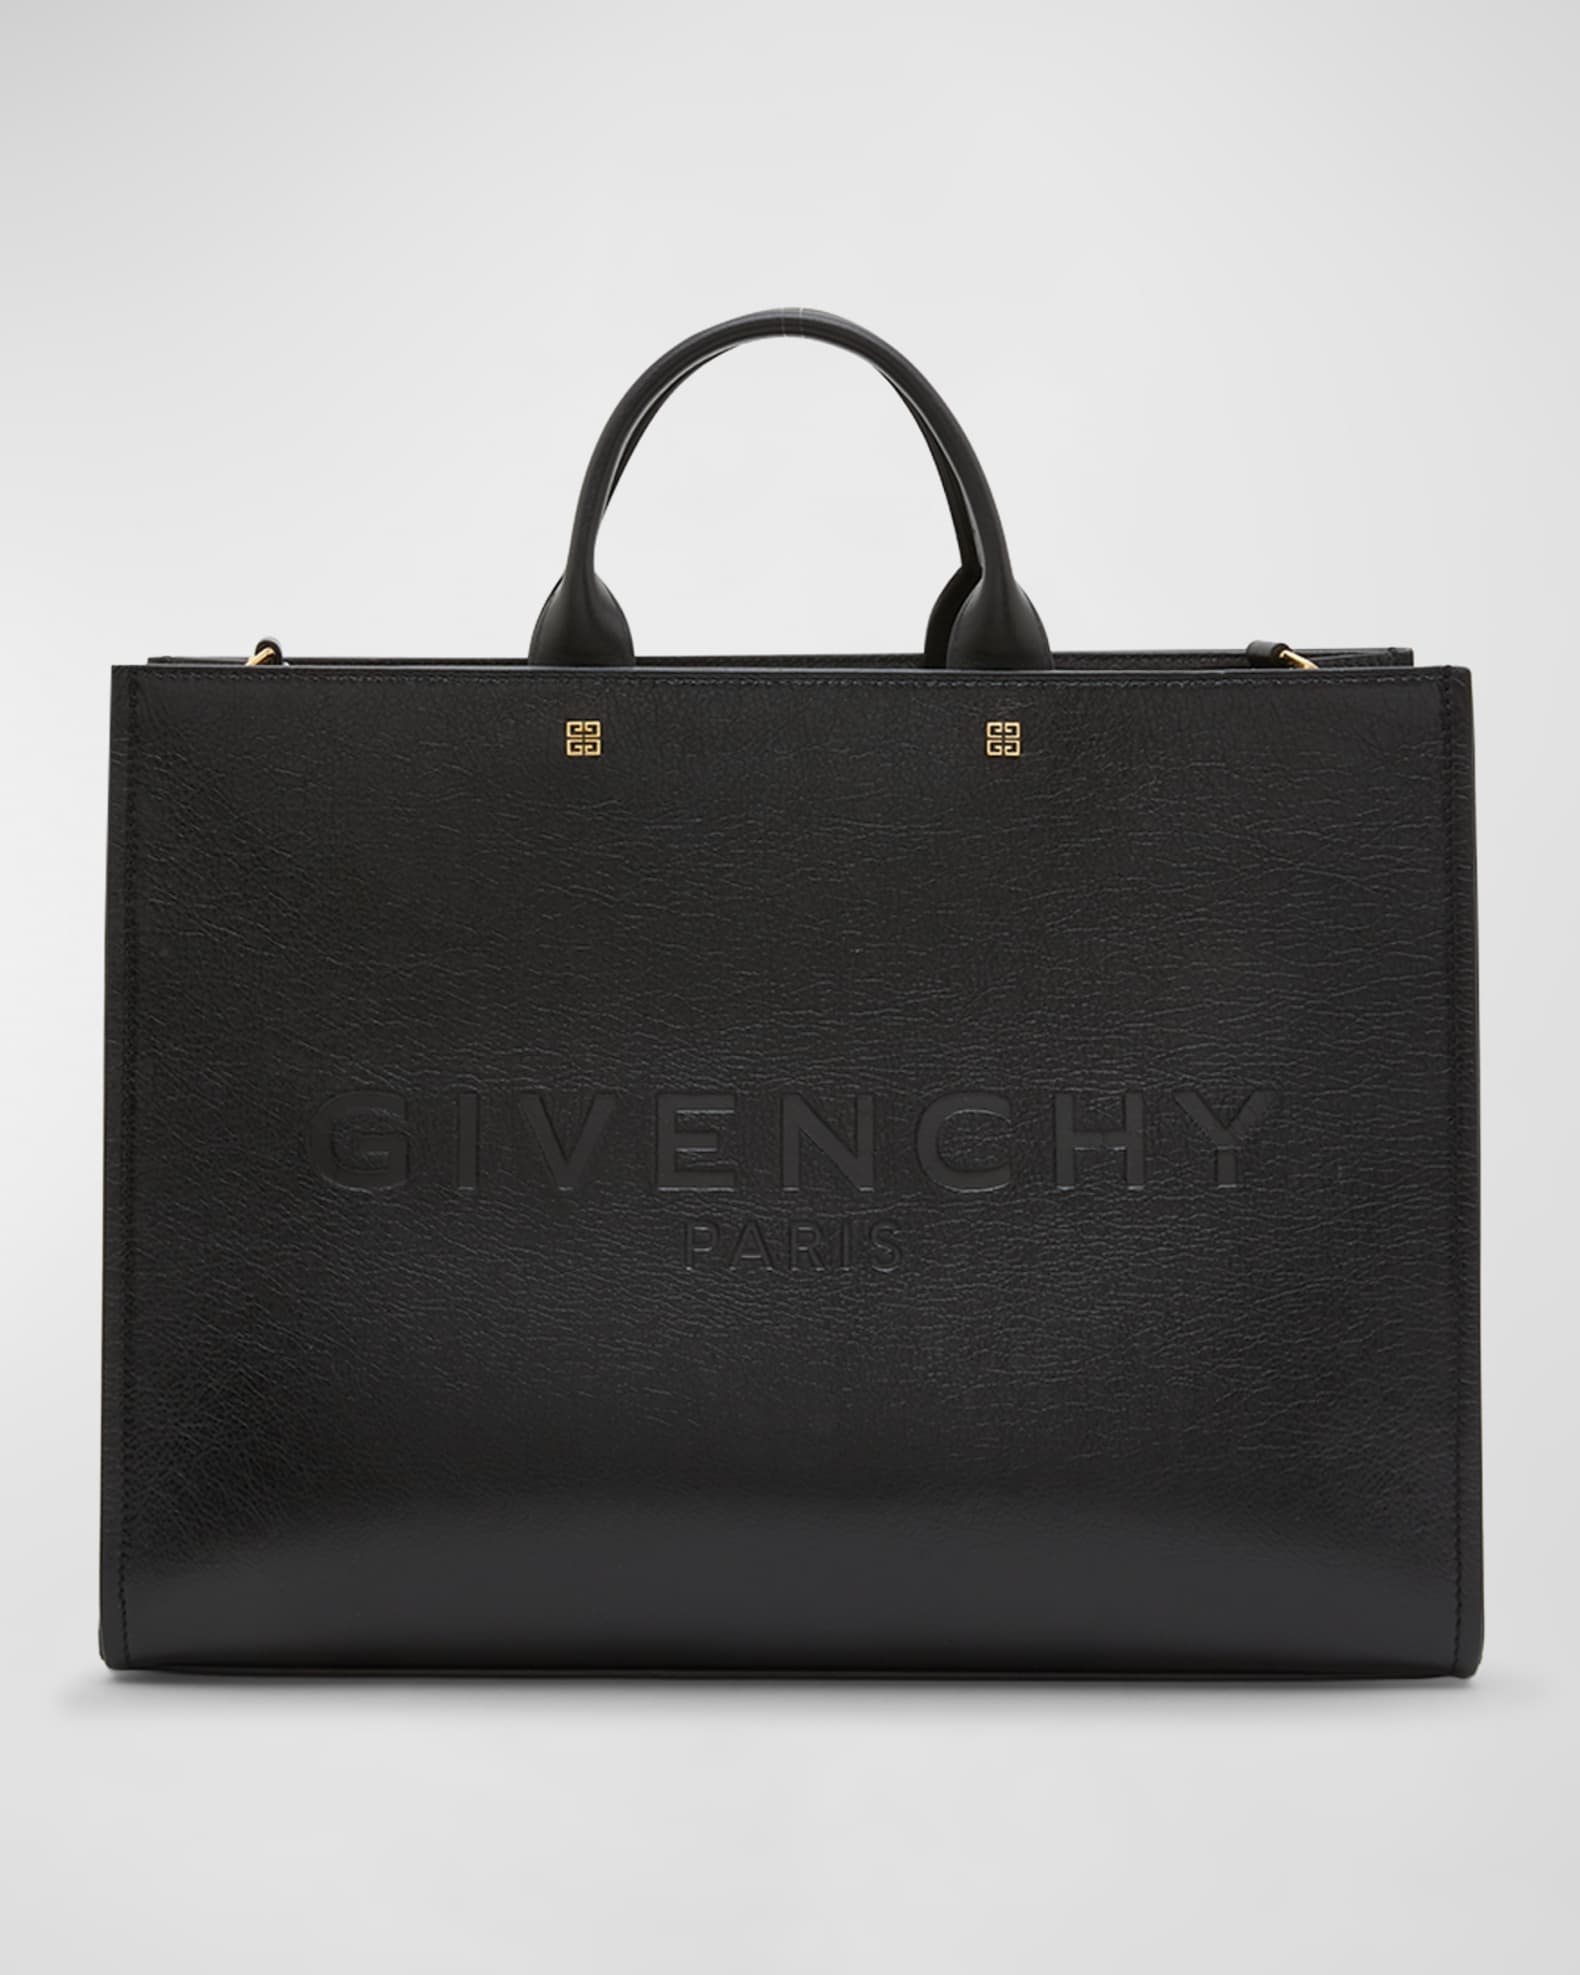 Givenchy - Antigona Large Woven Leather Tote Bag Givenchy